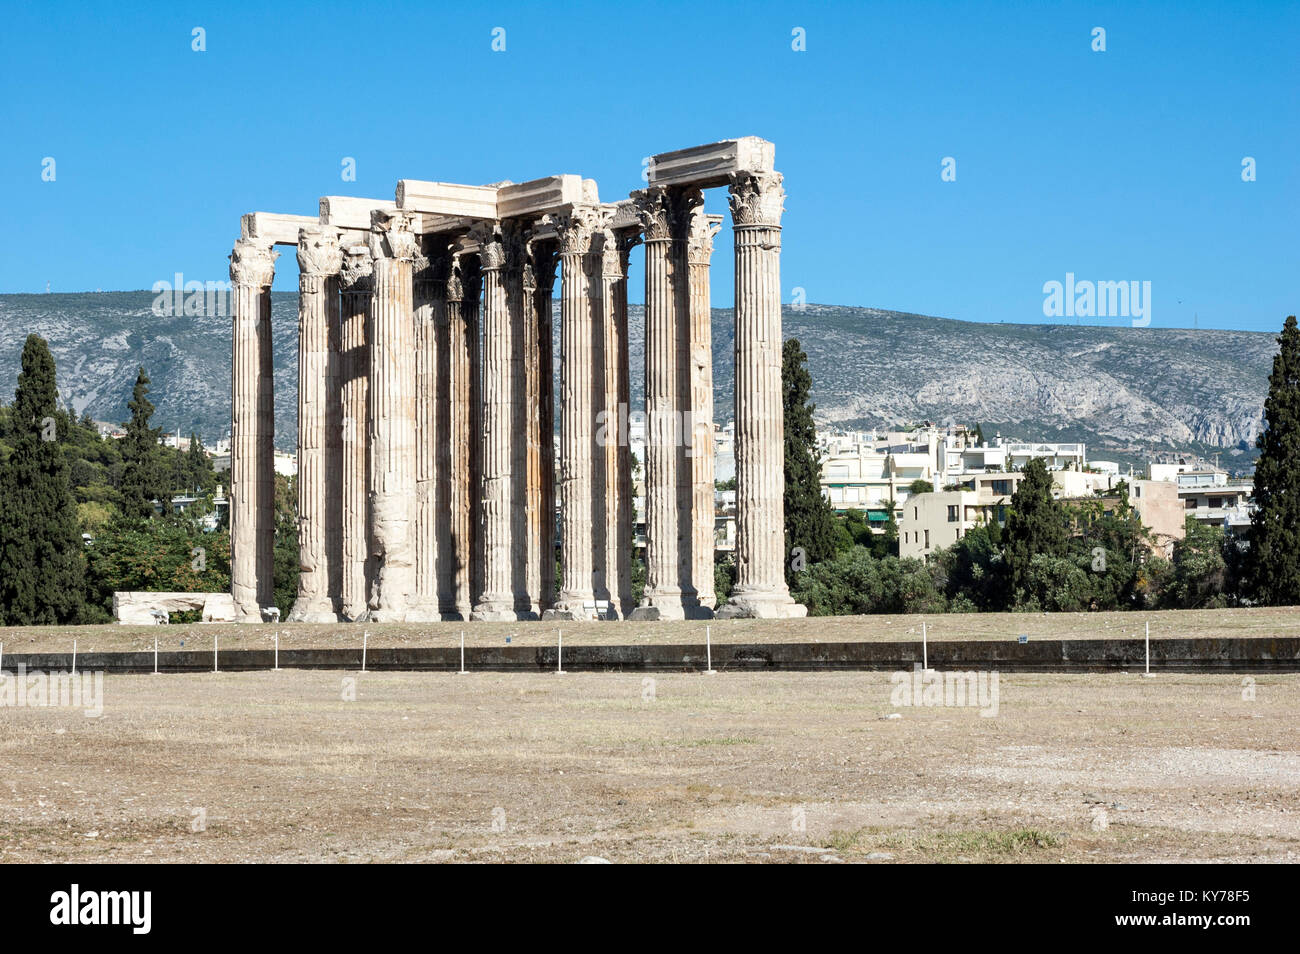 Temple of olympus zeus -Fotos und -Bildmaterial in hoher Auflösung – Alamy